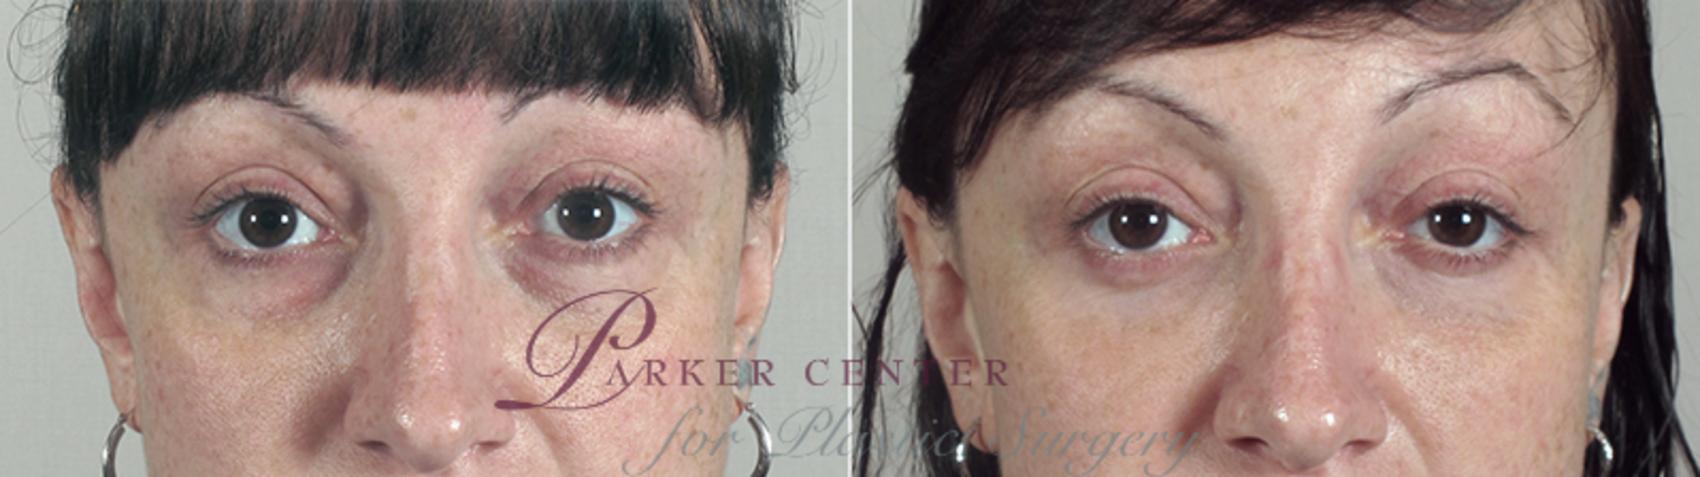 Eyelid Lift Case 92 Before & After View #1 | Paramus, NJ | Parker Center for Plastic Surgery